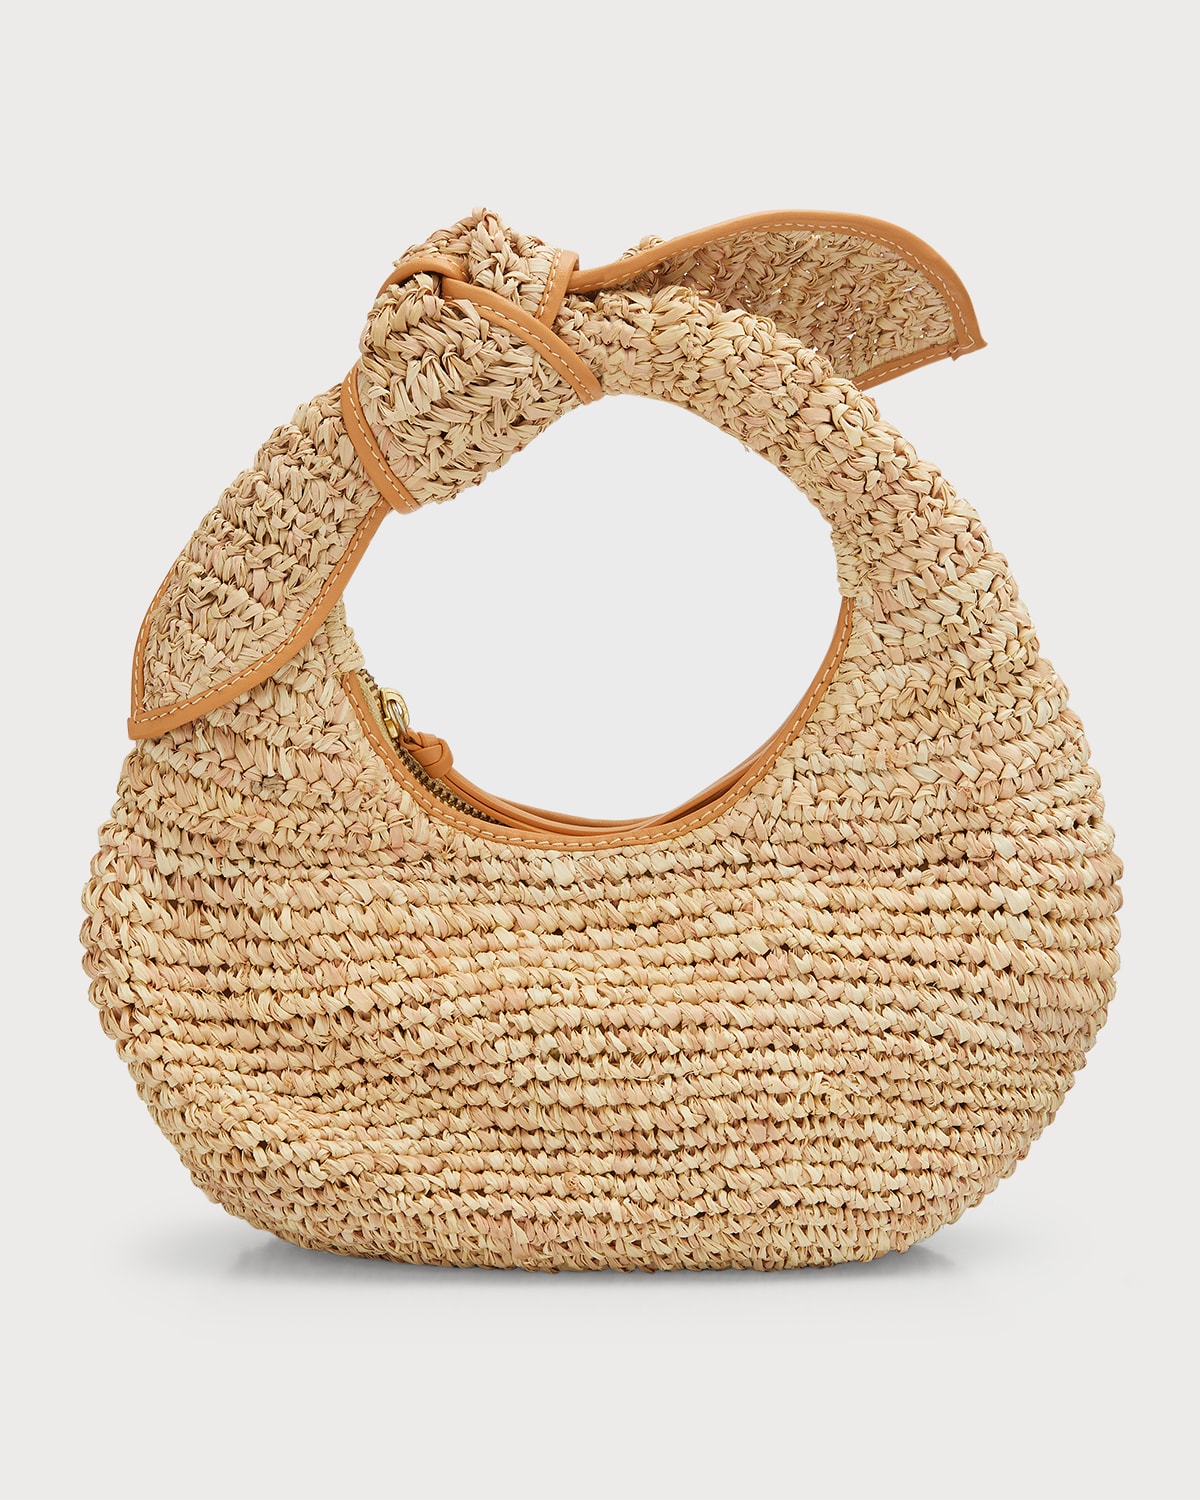 The Josie Knot Raffia Top-Handle Bag